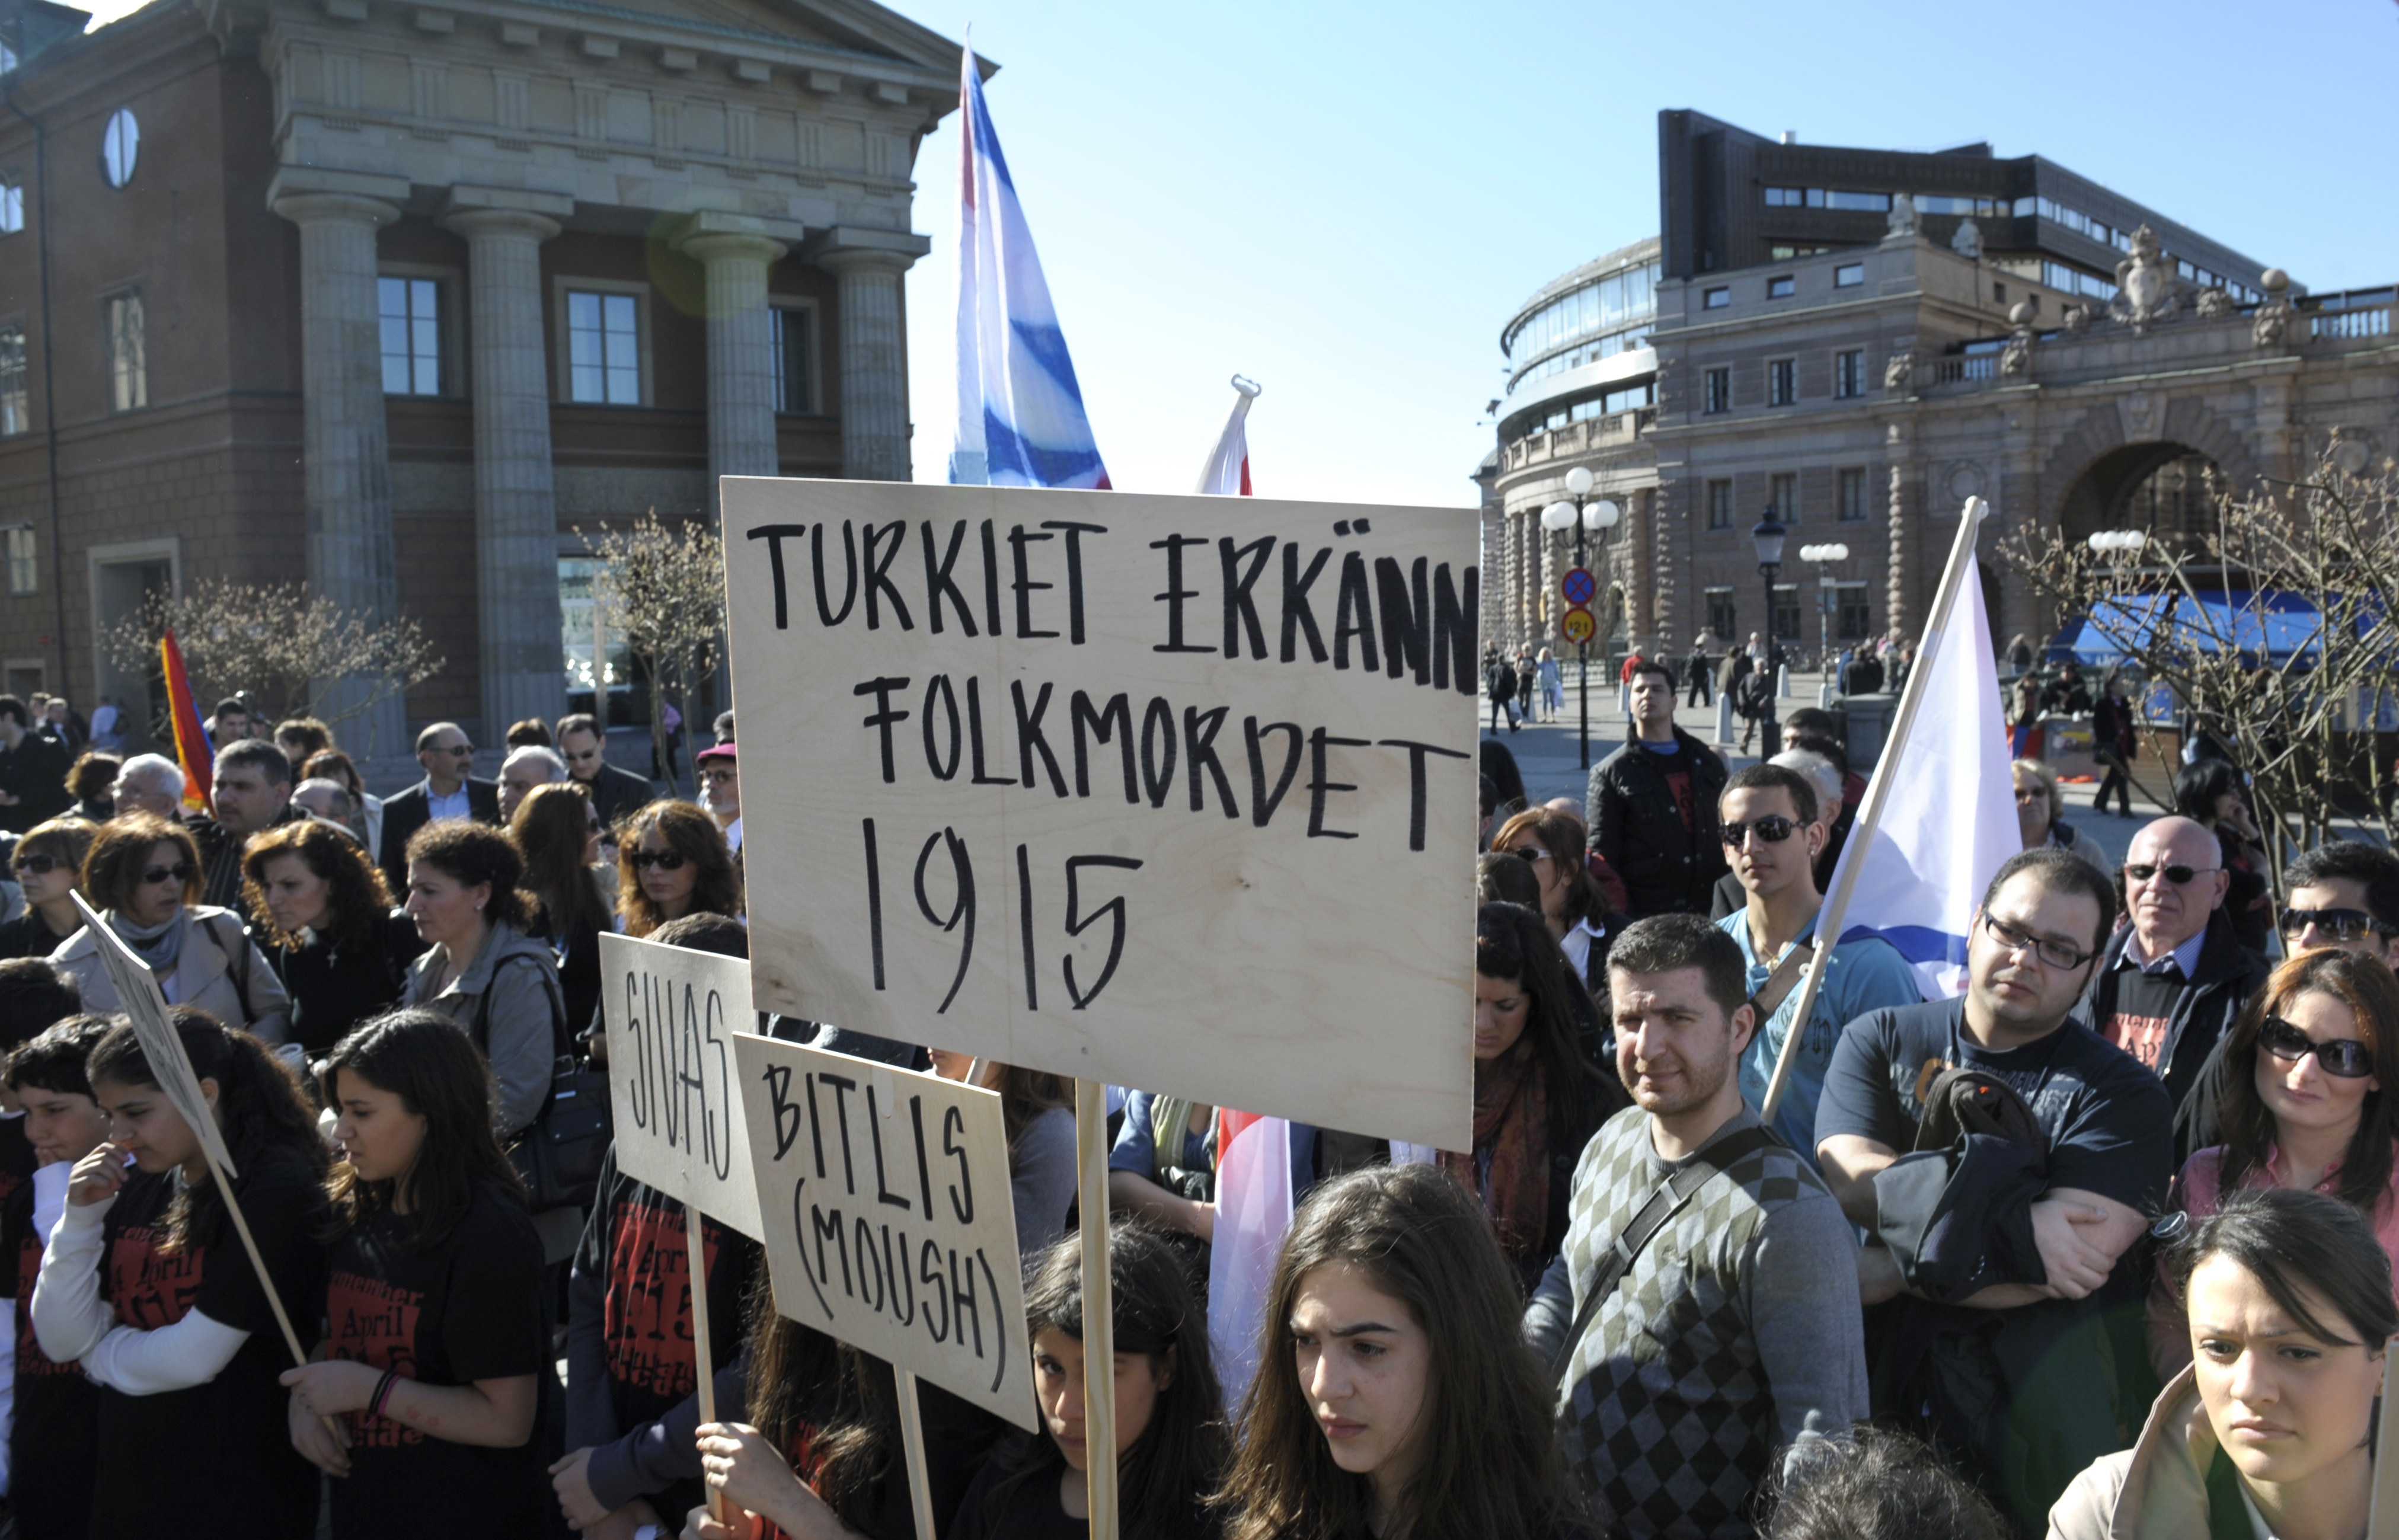 turkiet, Armenier, Sverige, Folkmord